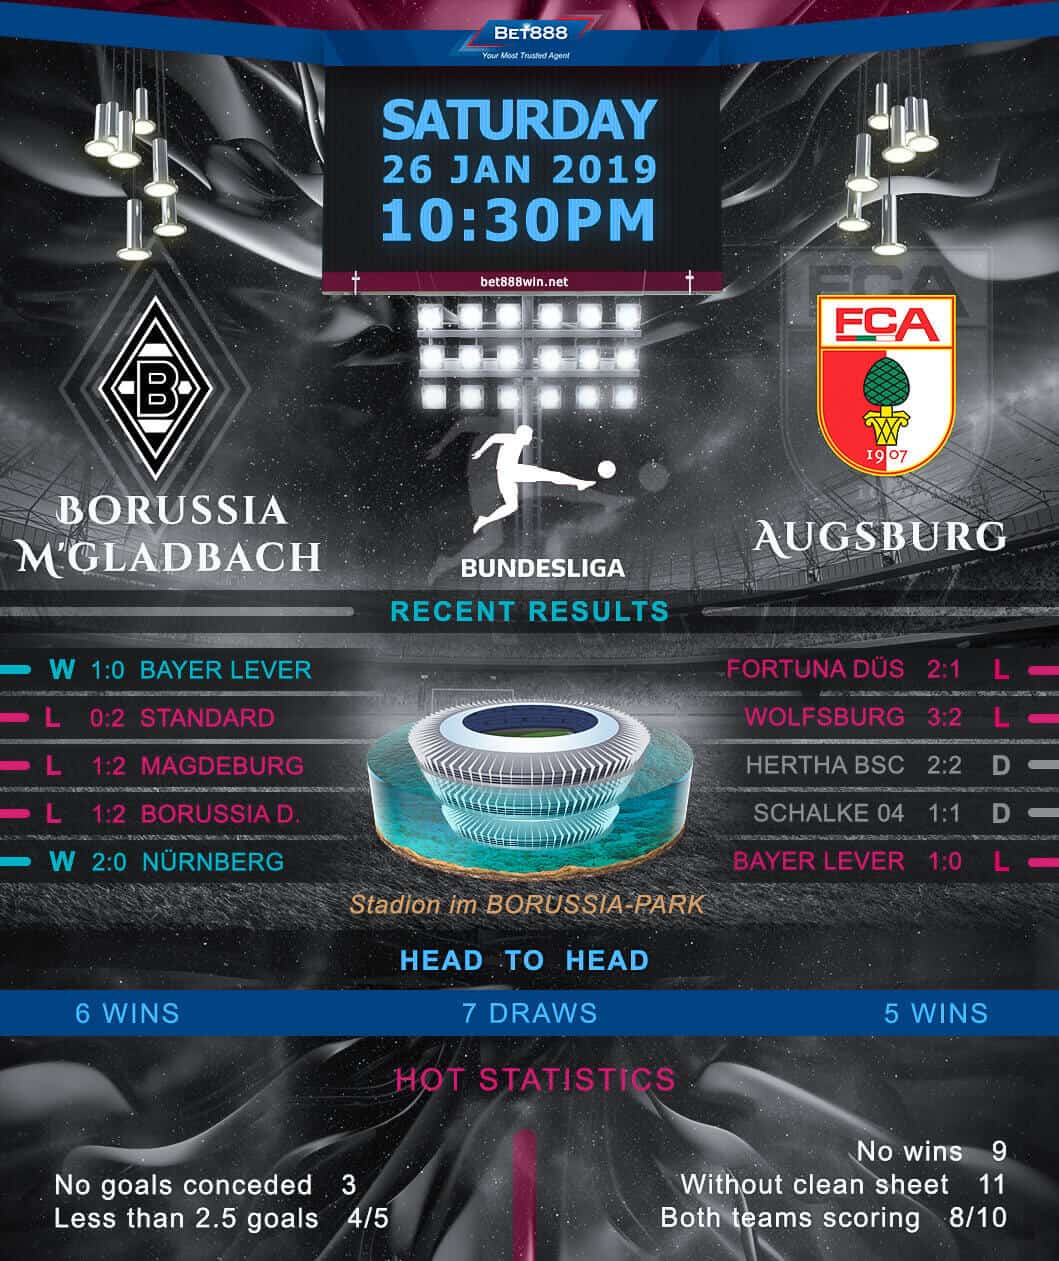 Borussia Monchelgadbach vs Augsburg﻿ 26/01/19